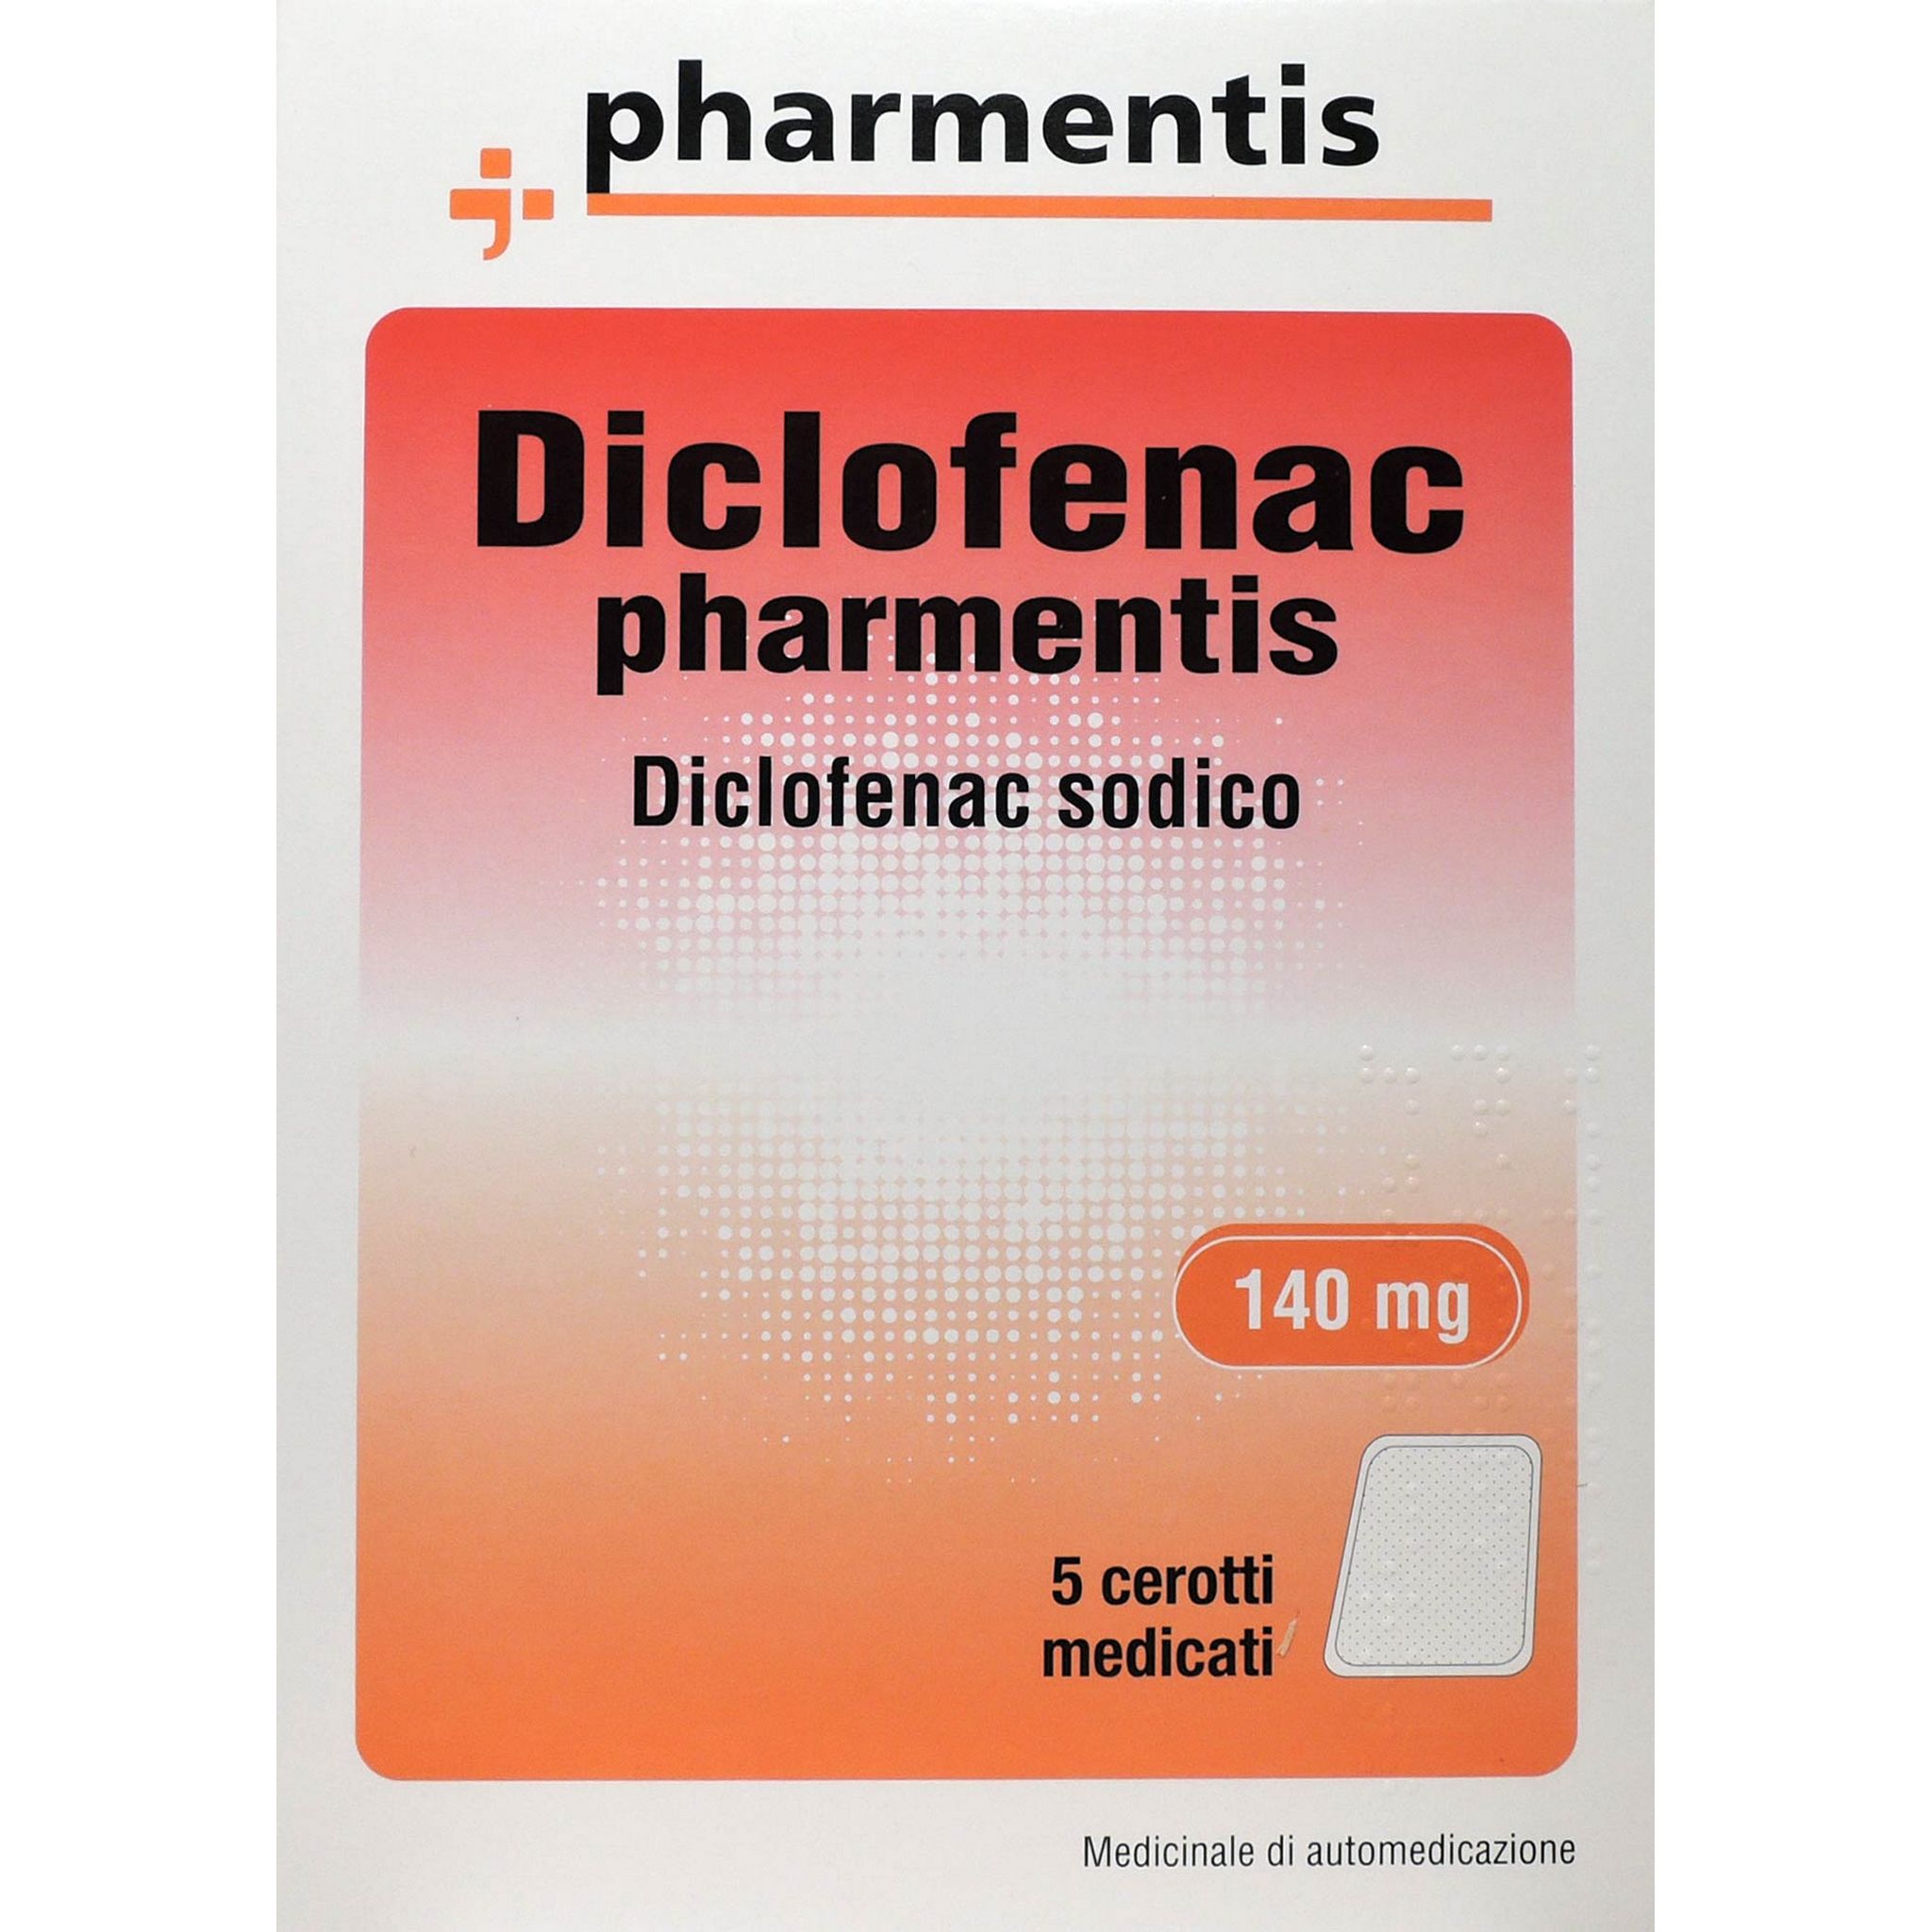 Diclofenac Phar 5cer Med 140mg